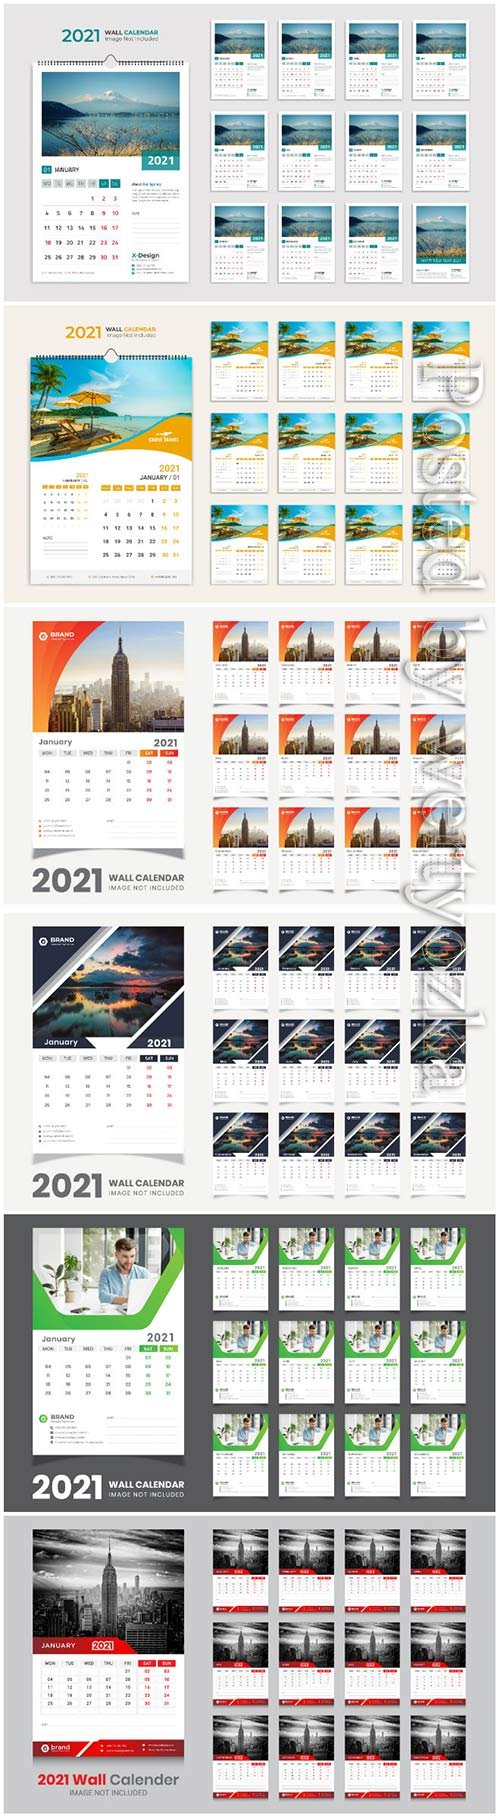 Desk calendar 2021 template design for new year vol 3